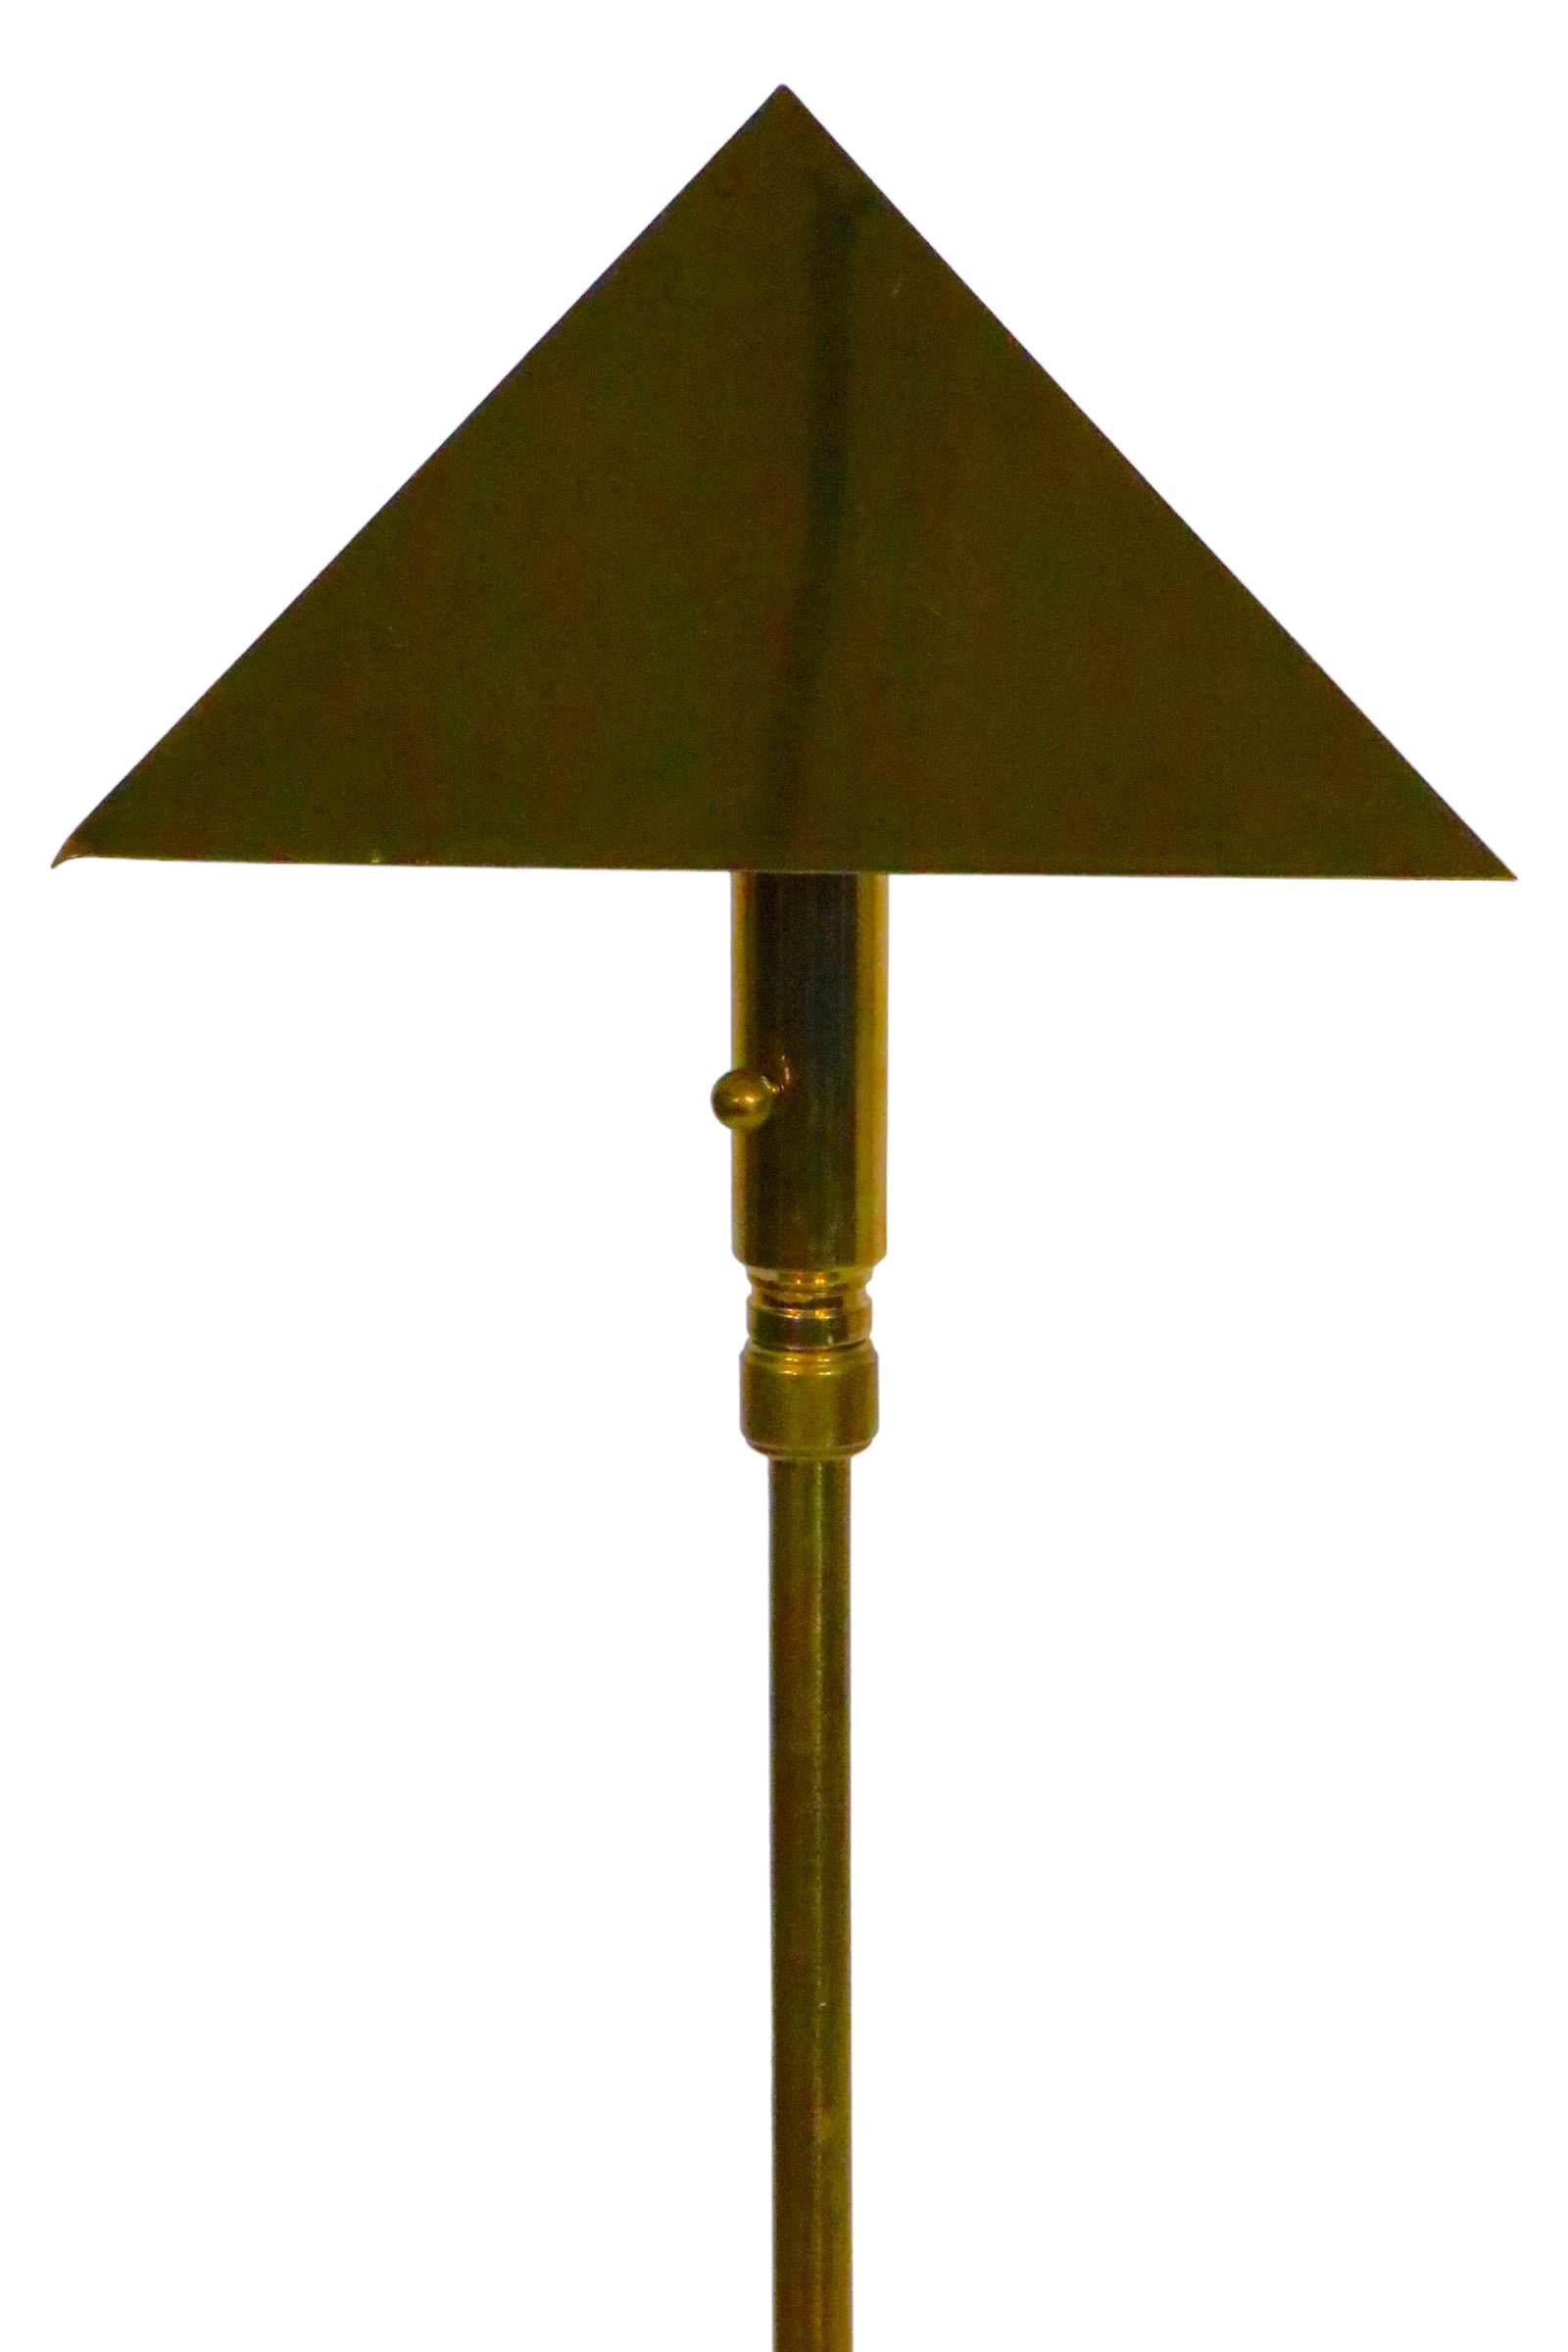 American Post Modern Adjustable Brass Floor Table Lamp by Chapman, c 1977